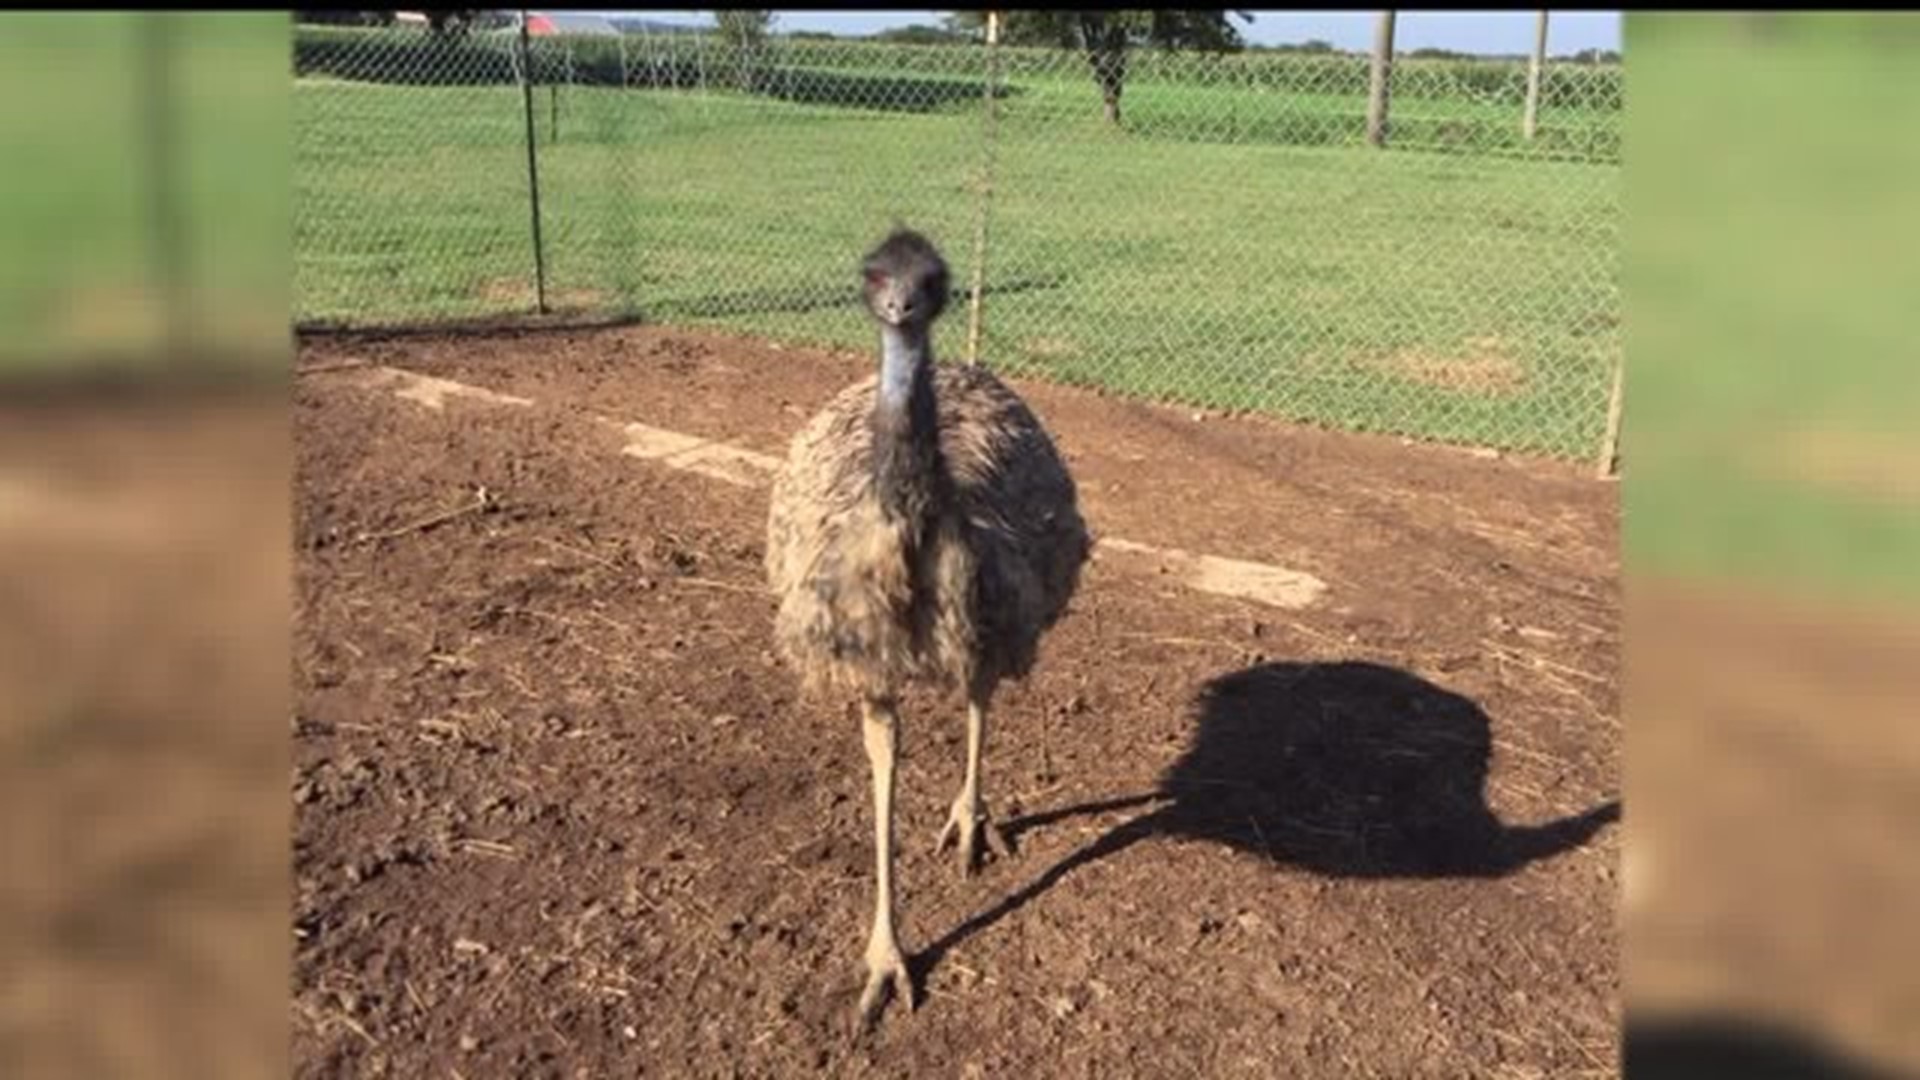 PEACH BOTTOM EMU ON THE LOOSE